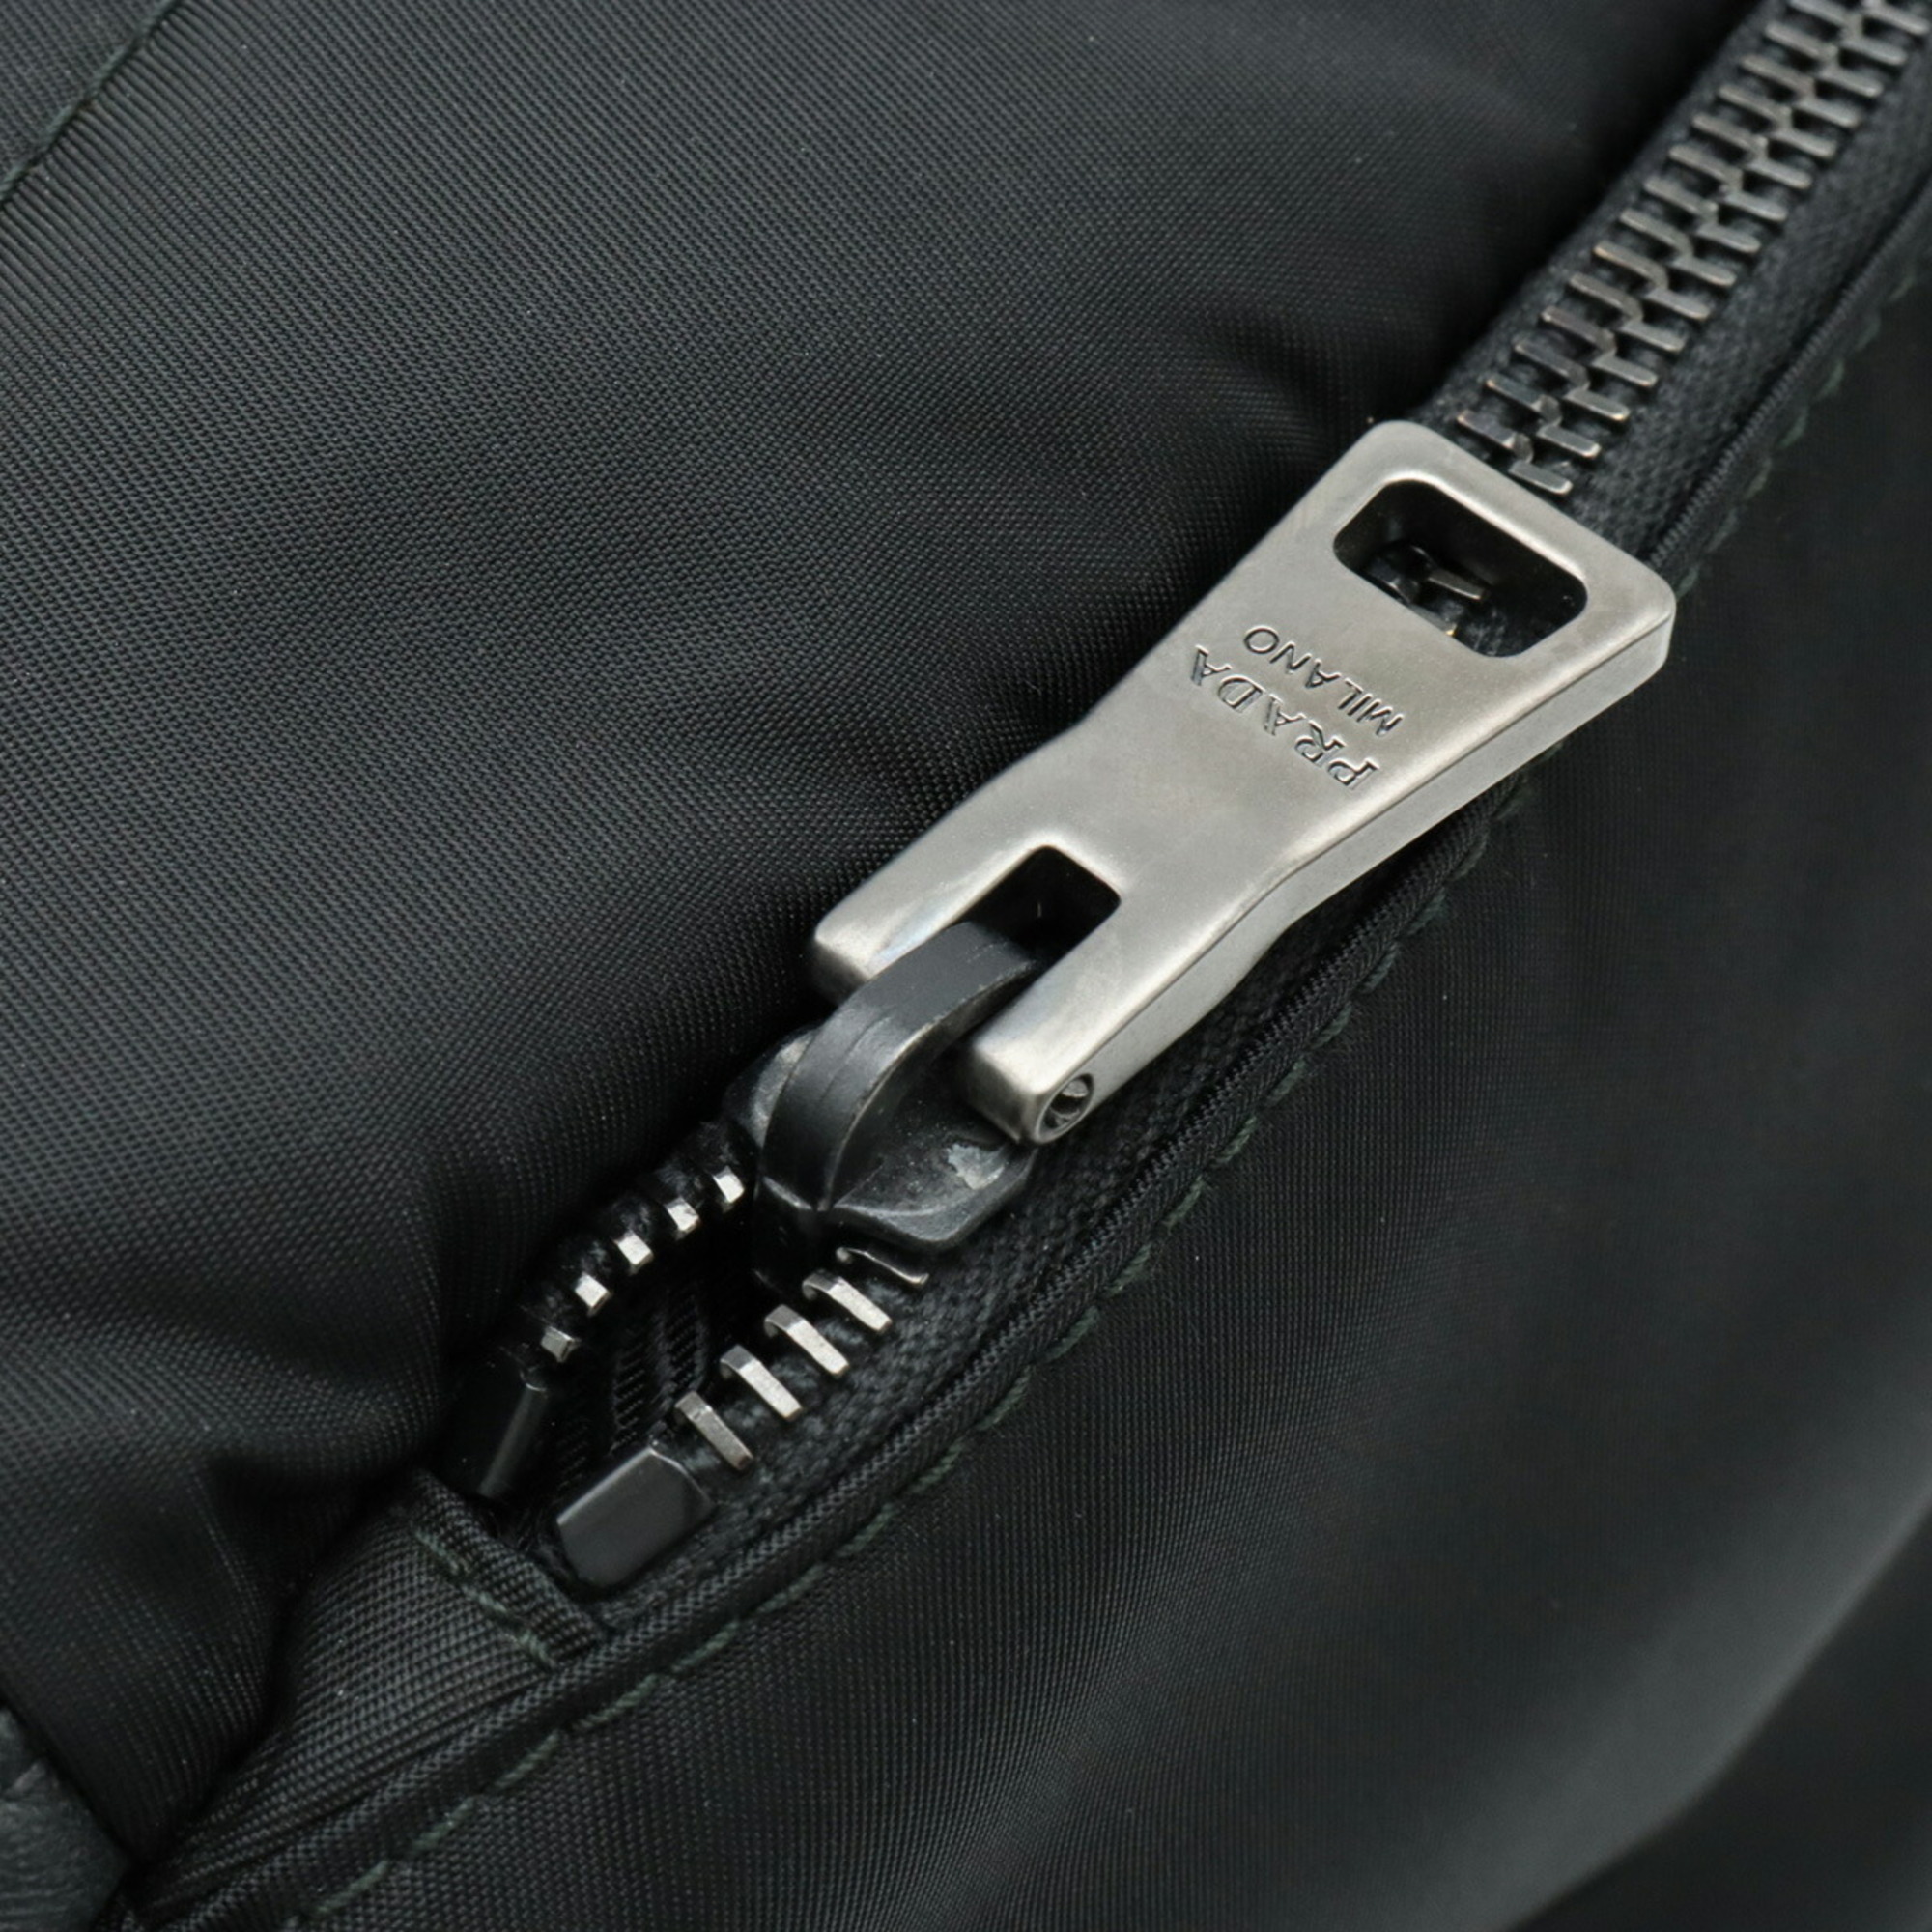 PRADA Prada shoulder bag nylon leather NERO black VA1063